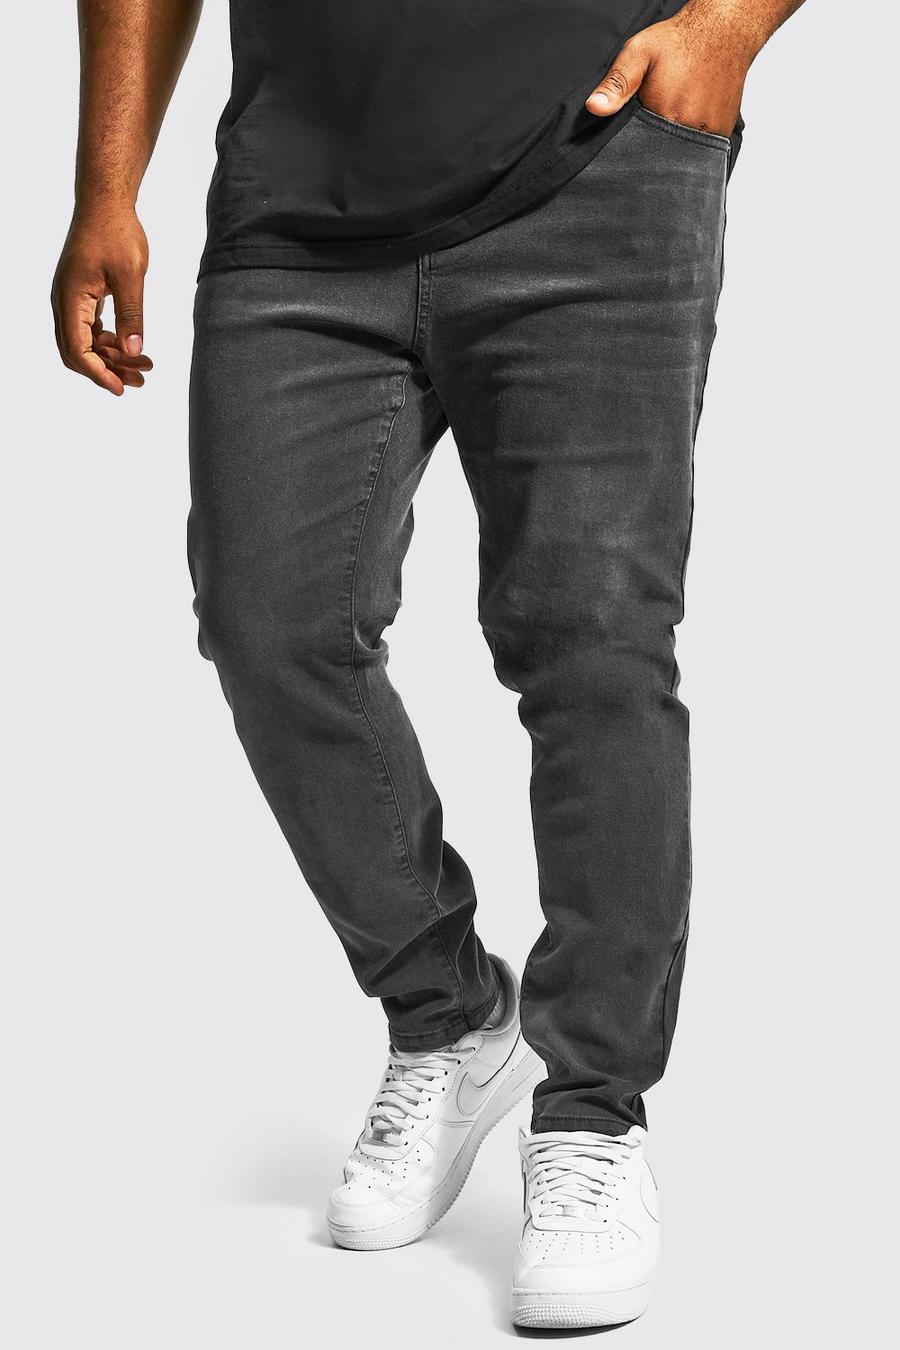 Grande taille - jean skinny en tissu recyclé, Charcoal gris